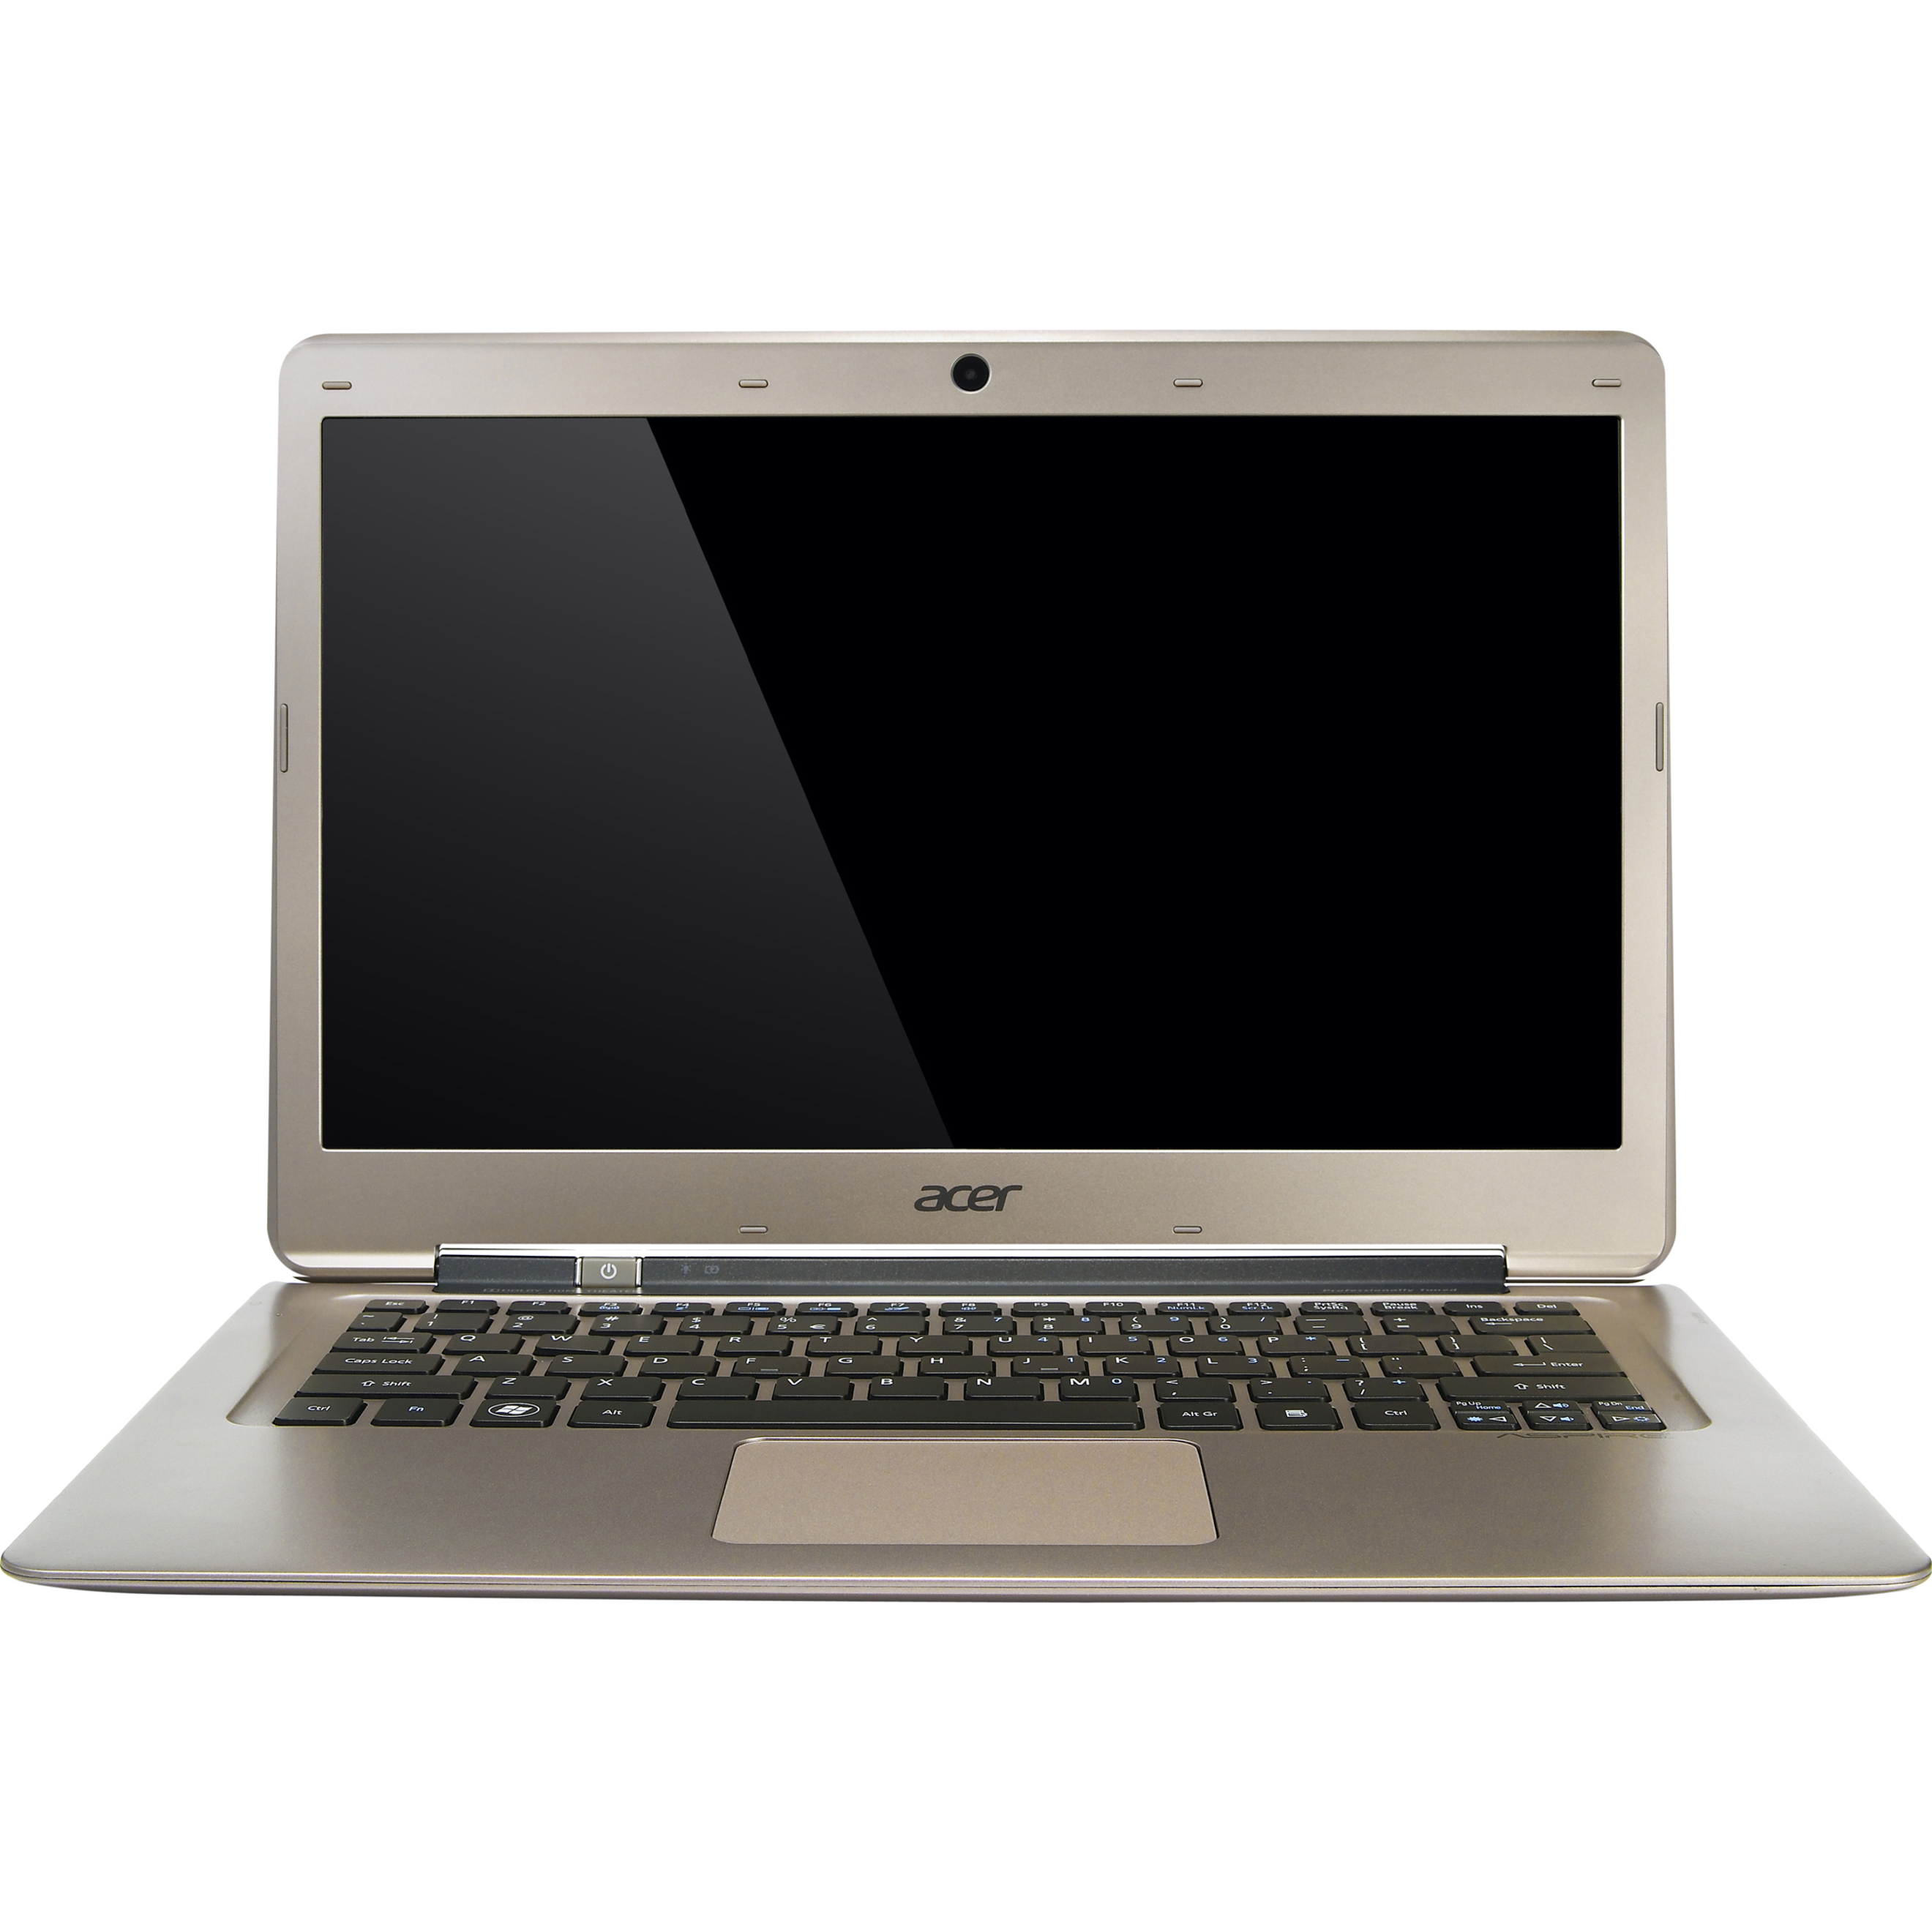 Acer Aspire 13.3" Ultrabook, Intel Core i3 i3-2377M, 500GB HD, Windows 8, S3-391-323a4G52add - image 1 of 8